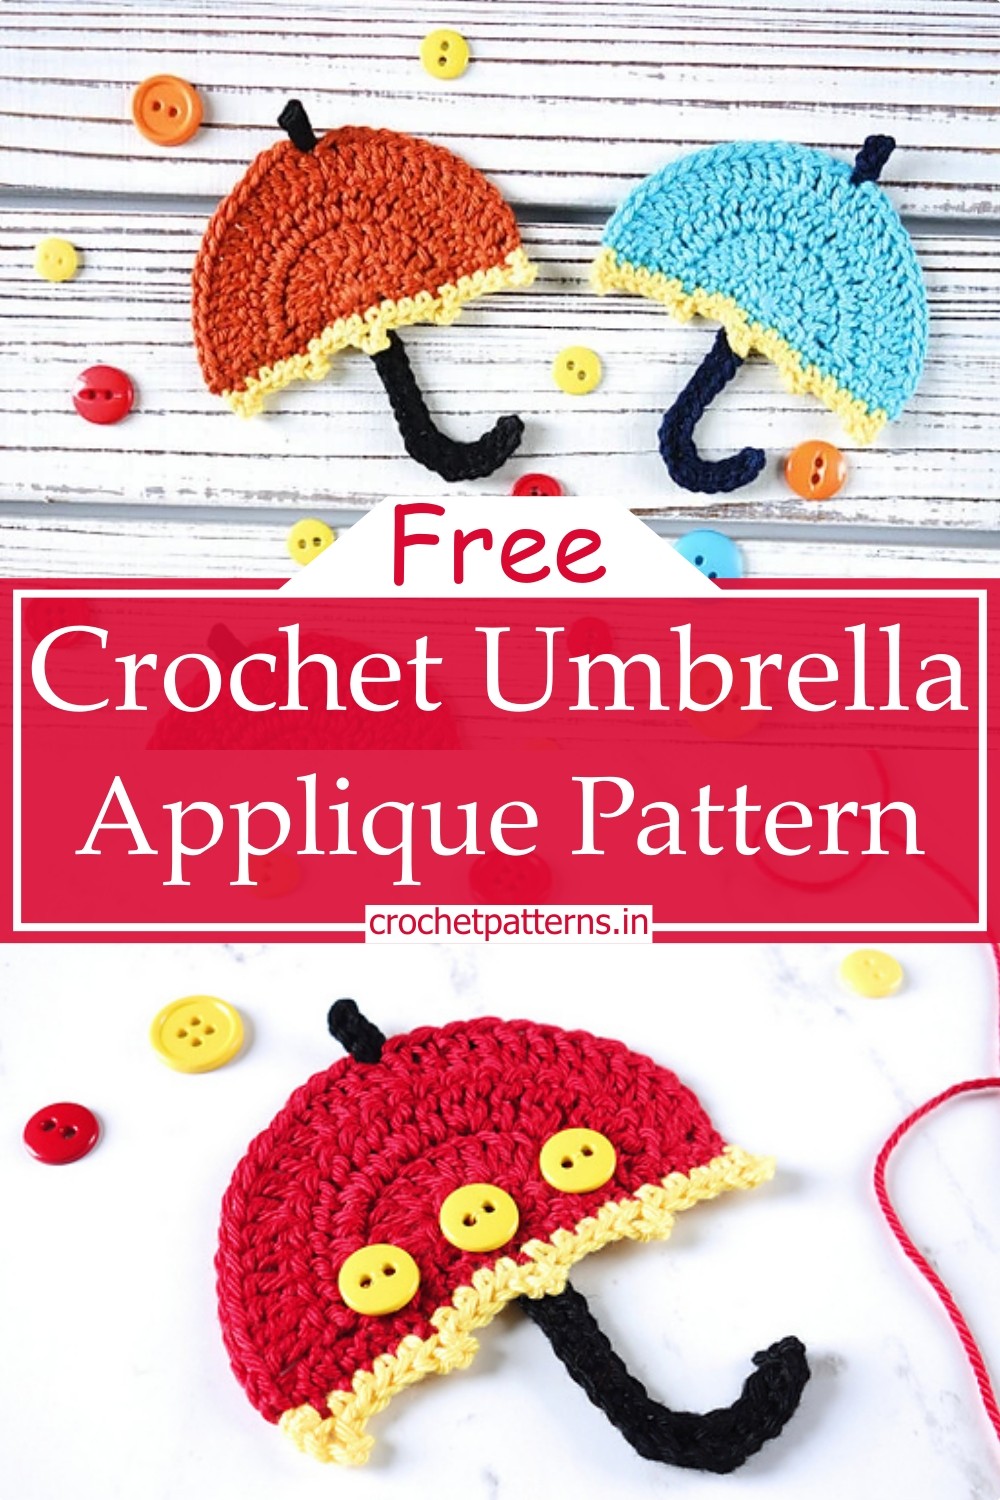 Crochet Umbrella Applique Pattern